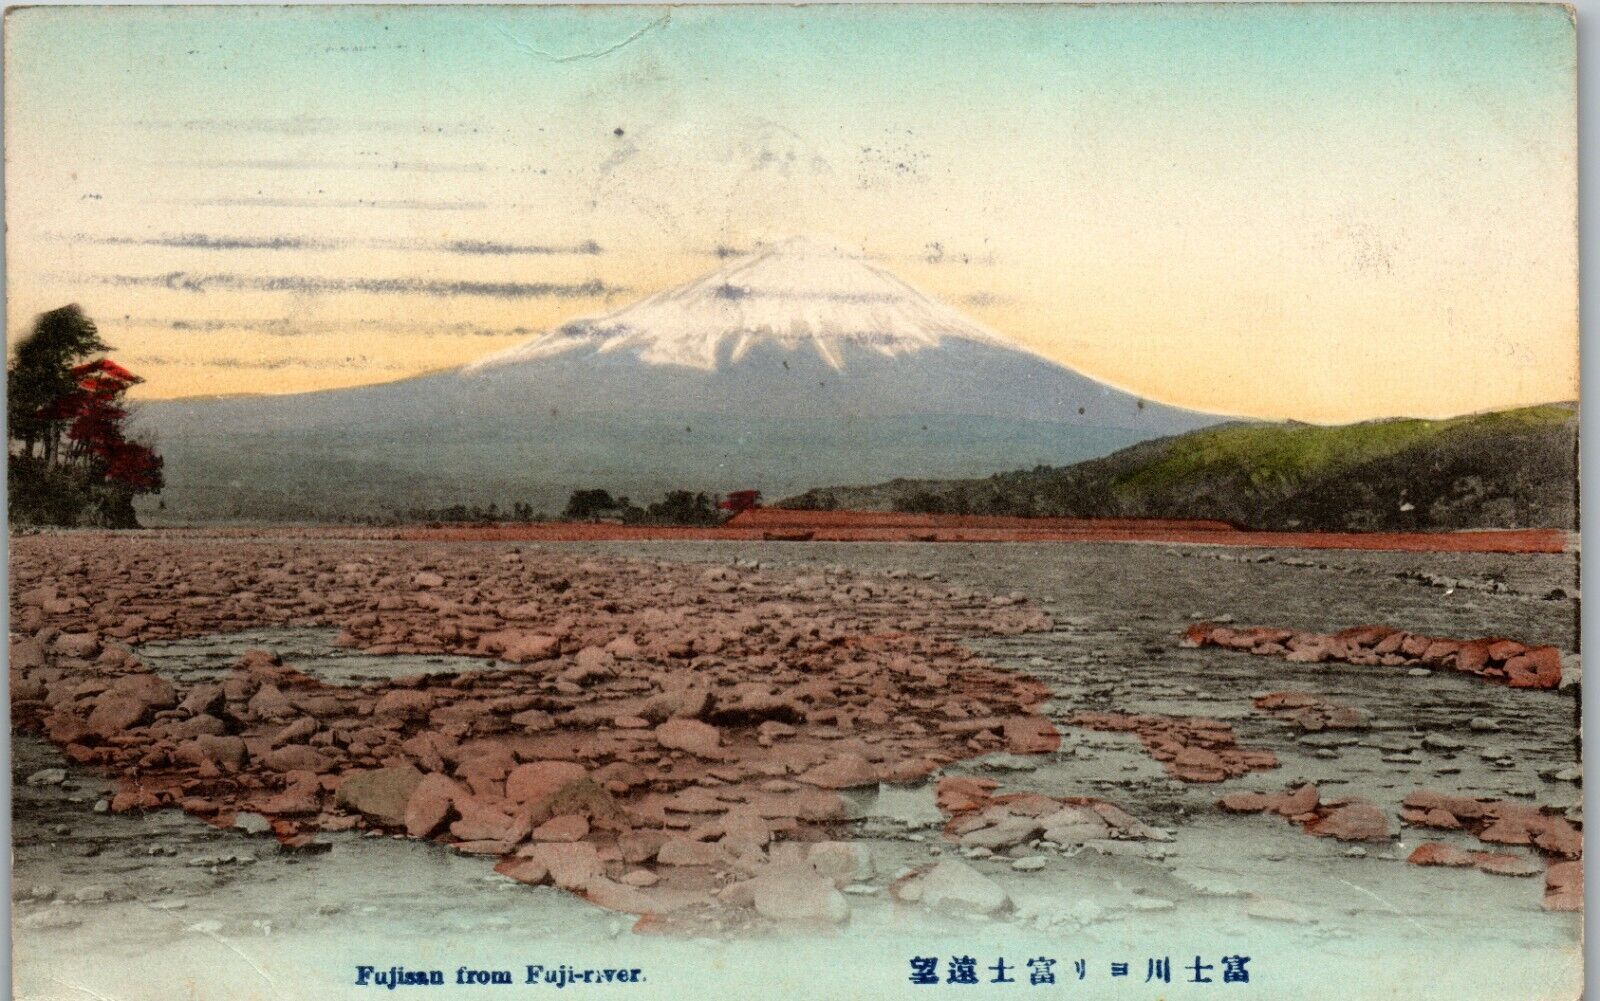 Japan, Fujisan from Fuji River 1913 Vintage Postcard TT1